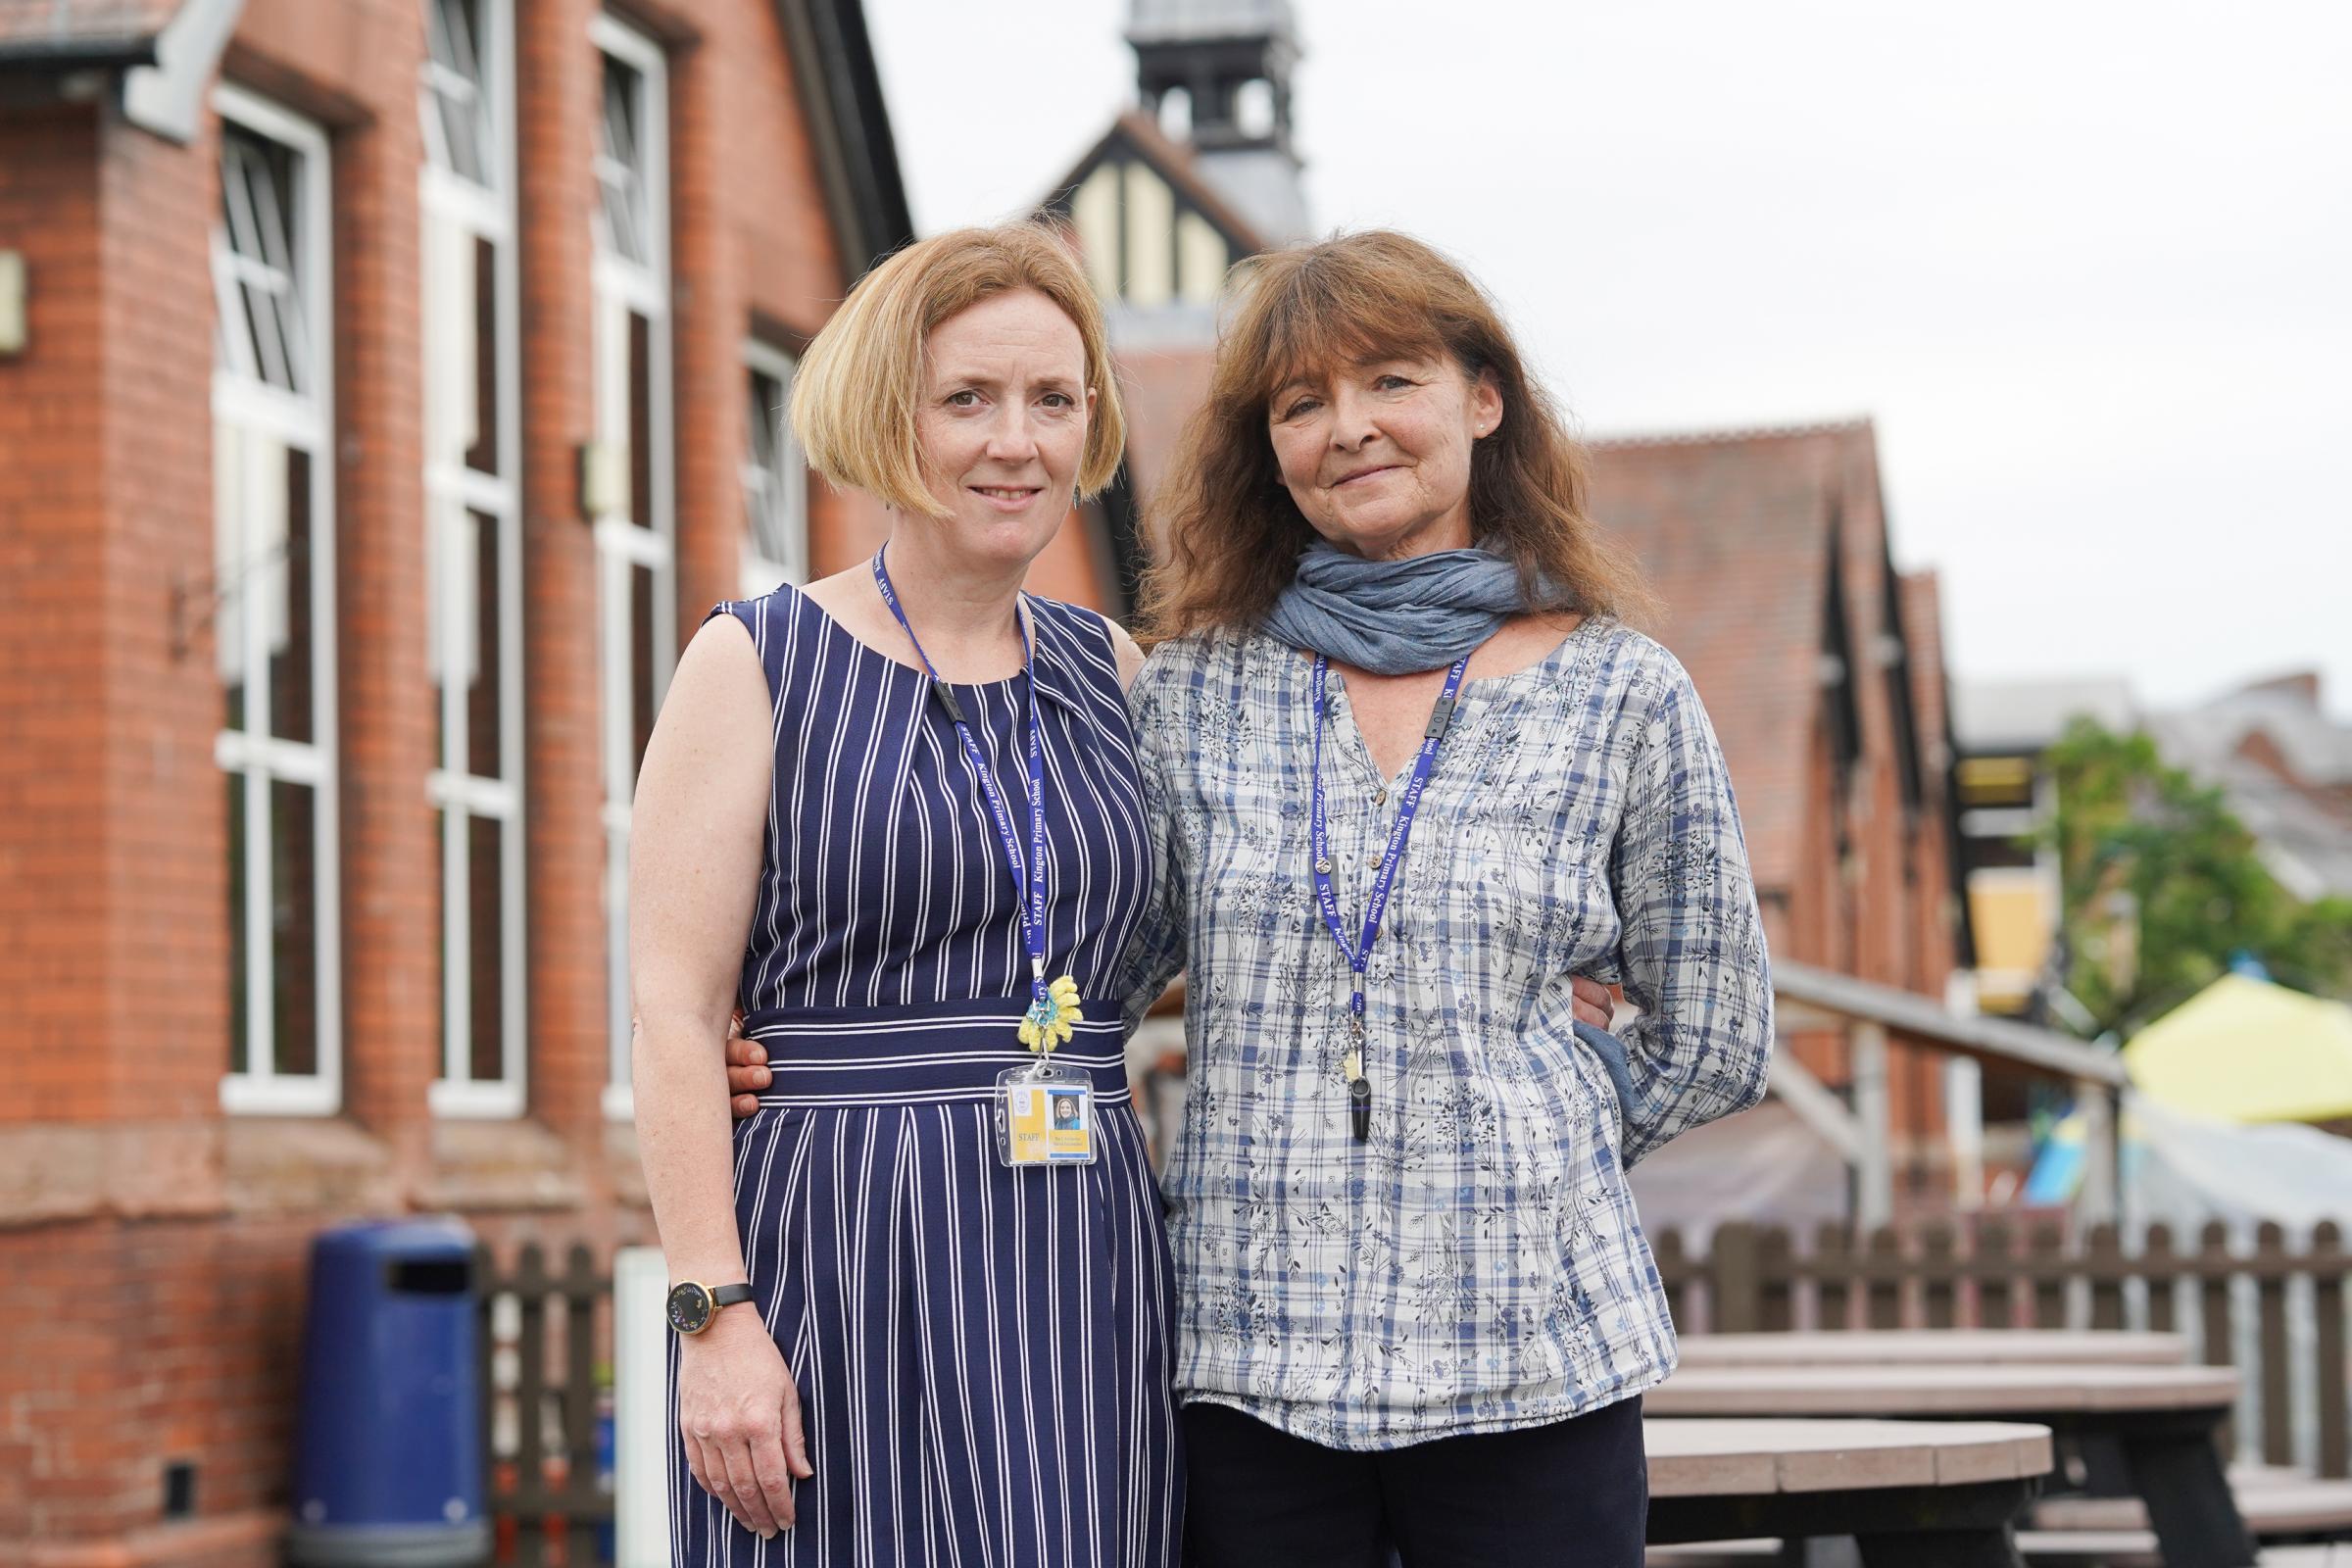 Shared headteachers at Kington Primary School, Emma Bretherton (left) and Anne Phillips.